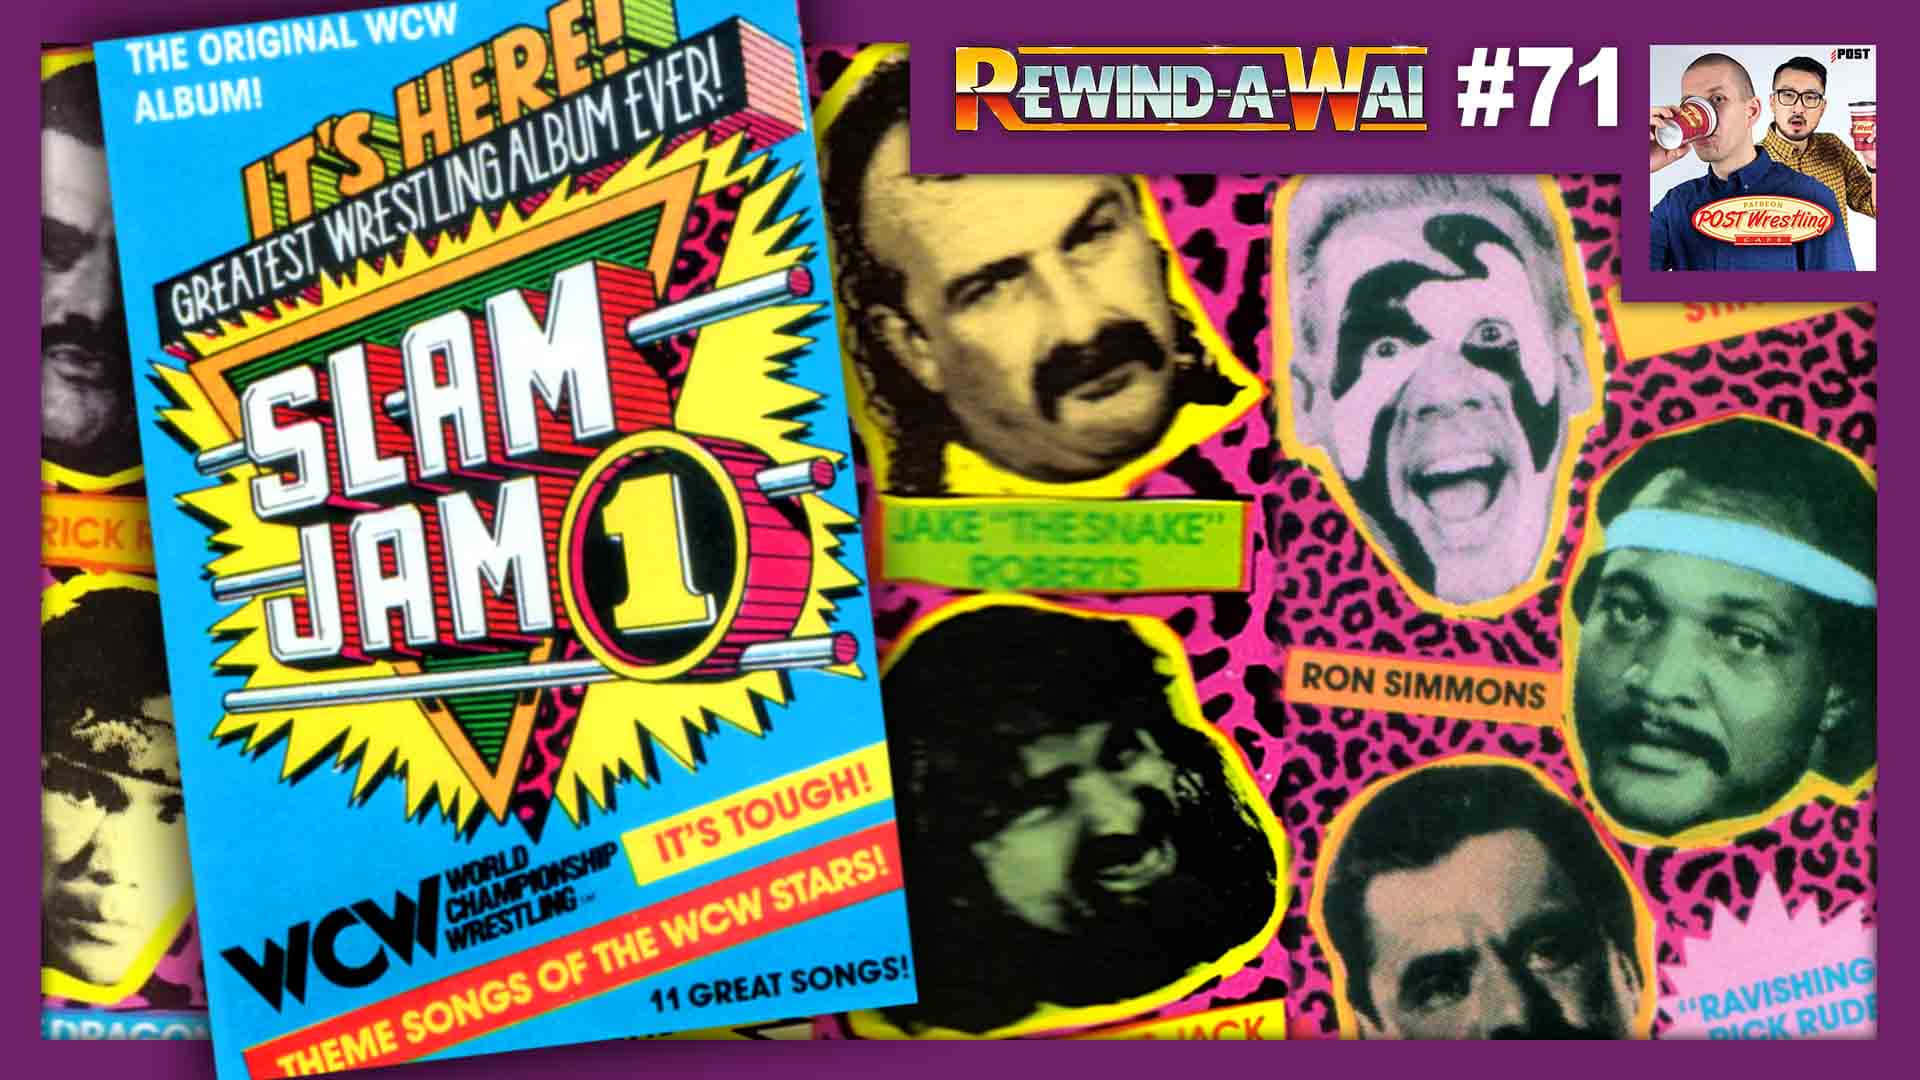 Rick Rude Wcw Slam Jam Vol. 1 Album Cover Wallpaper